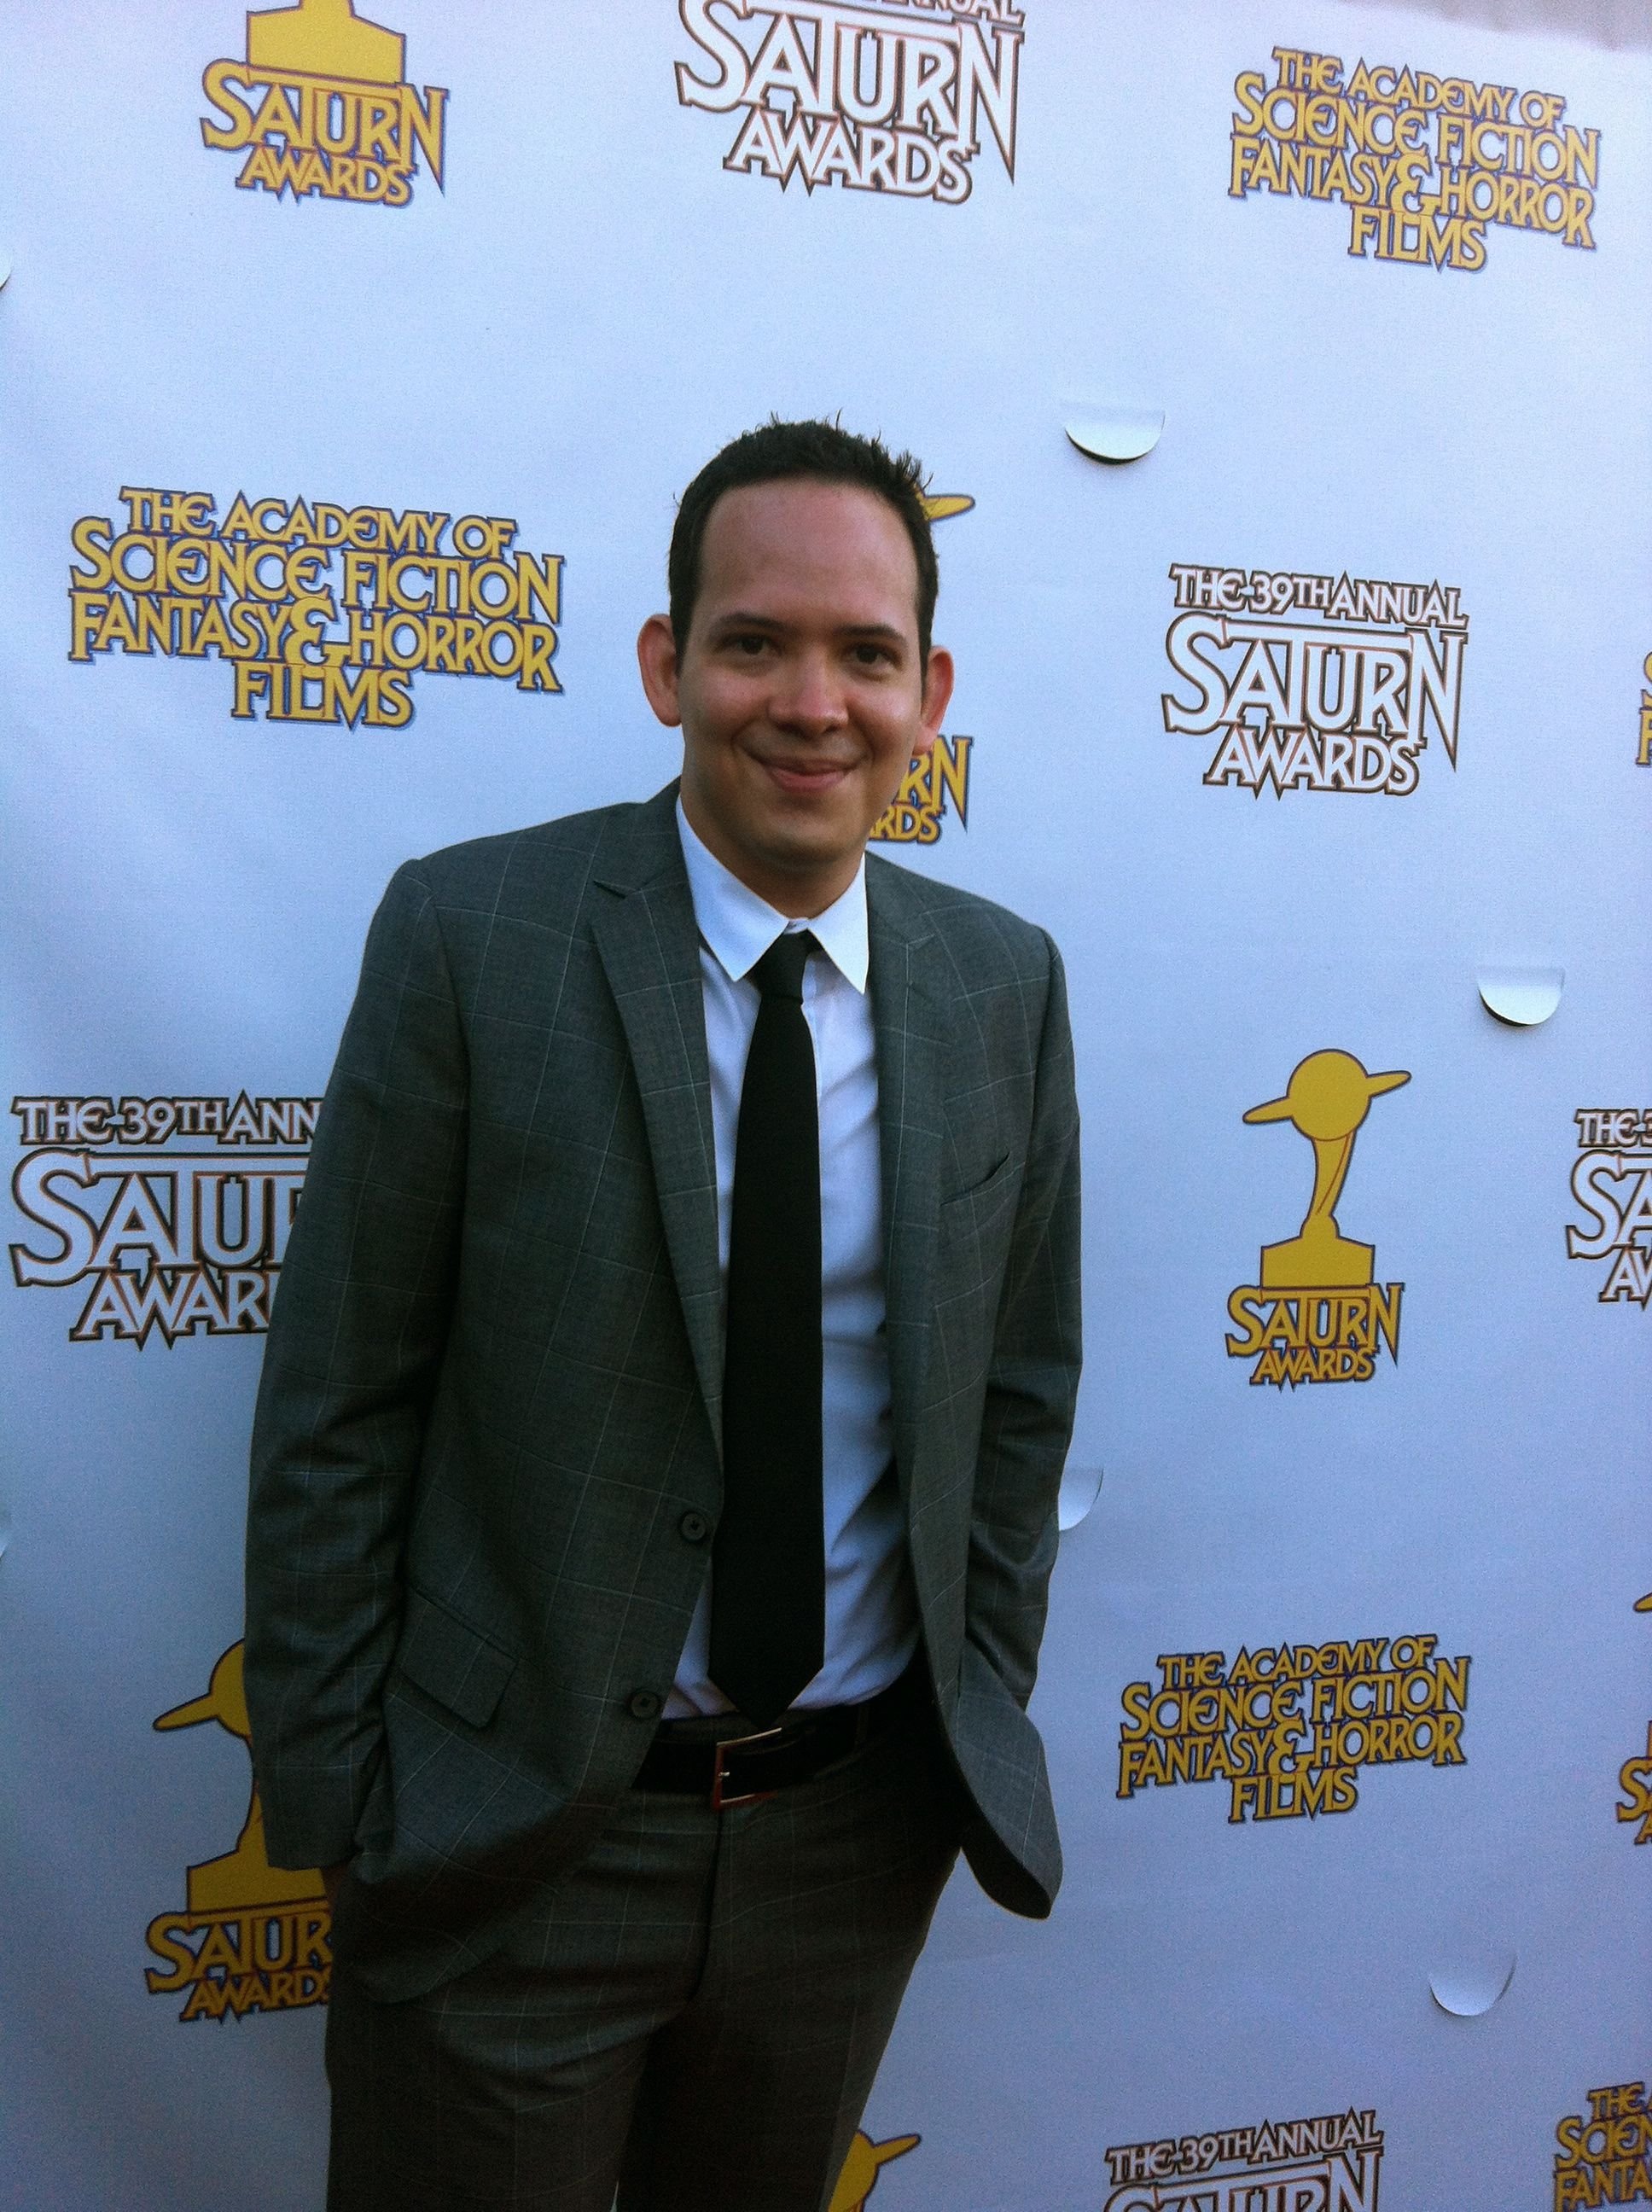 Star Trek: The Next Generation blu-ray producer Roger Lay, Jr at event of 2013 Saturn Awards.